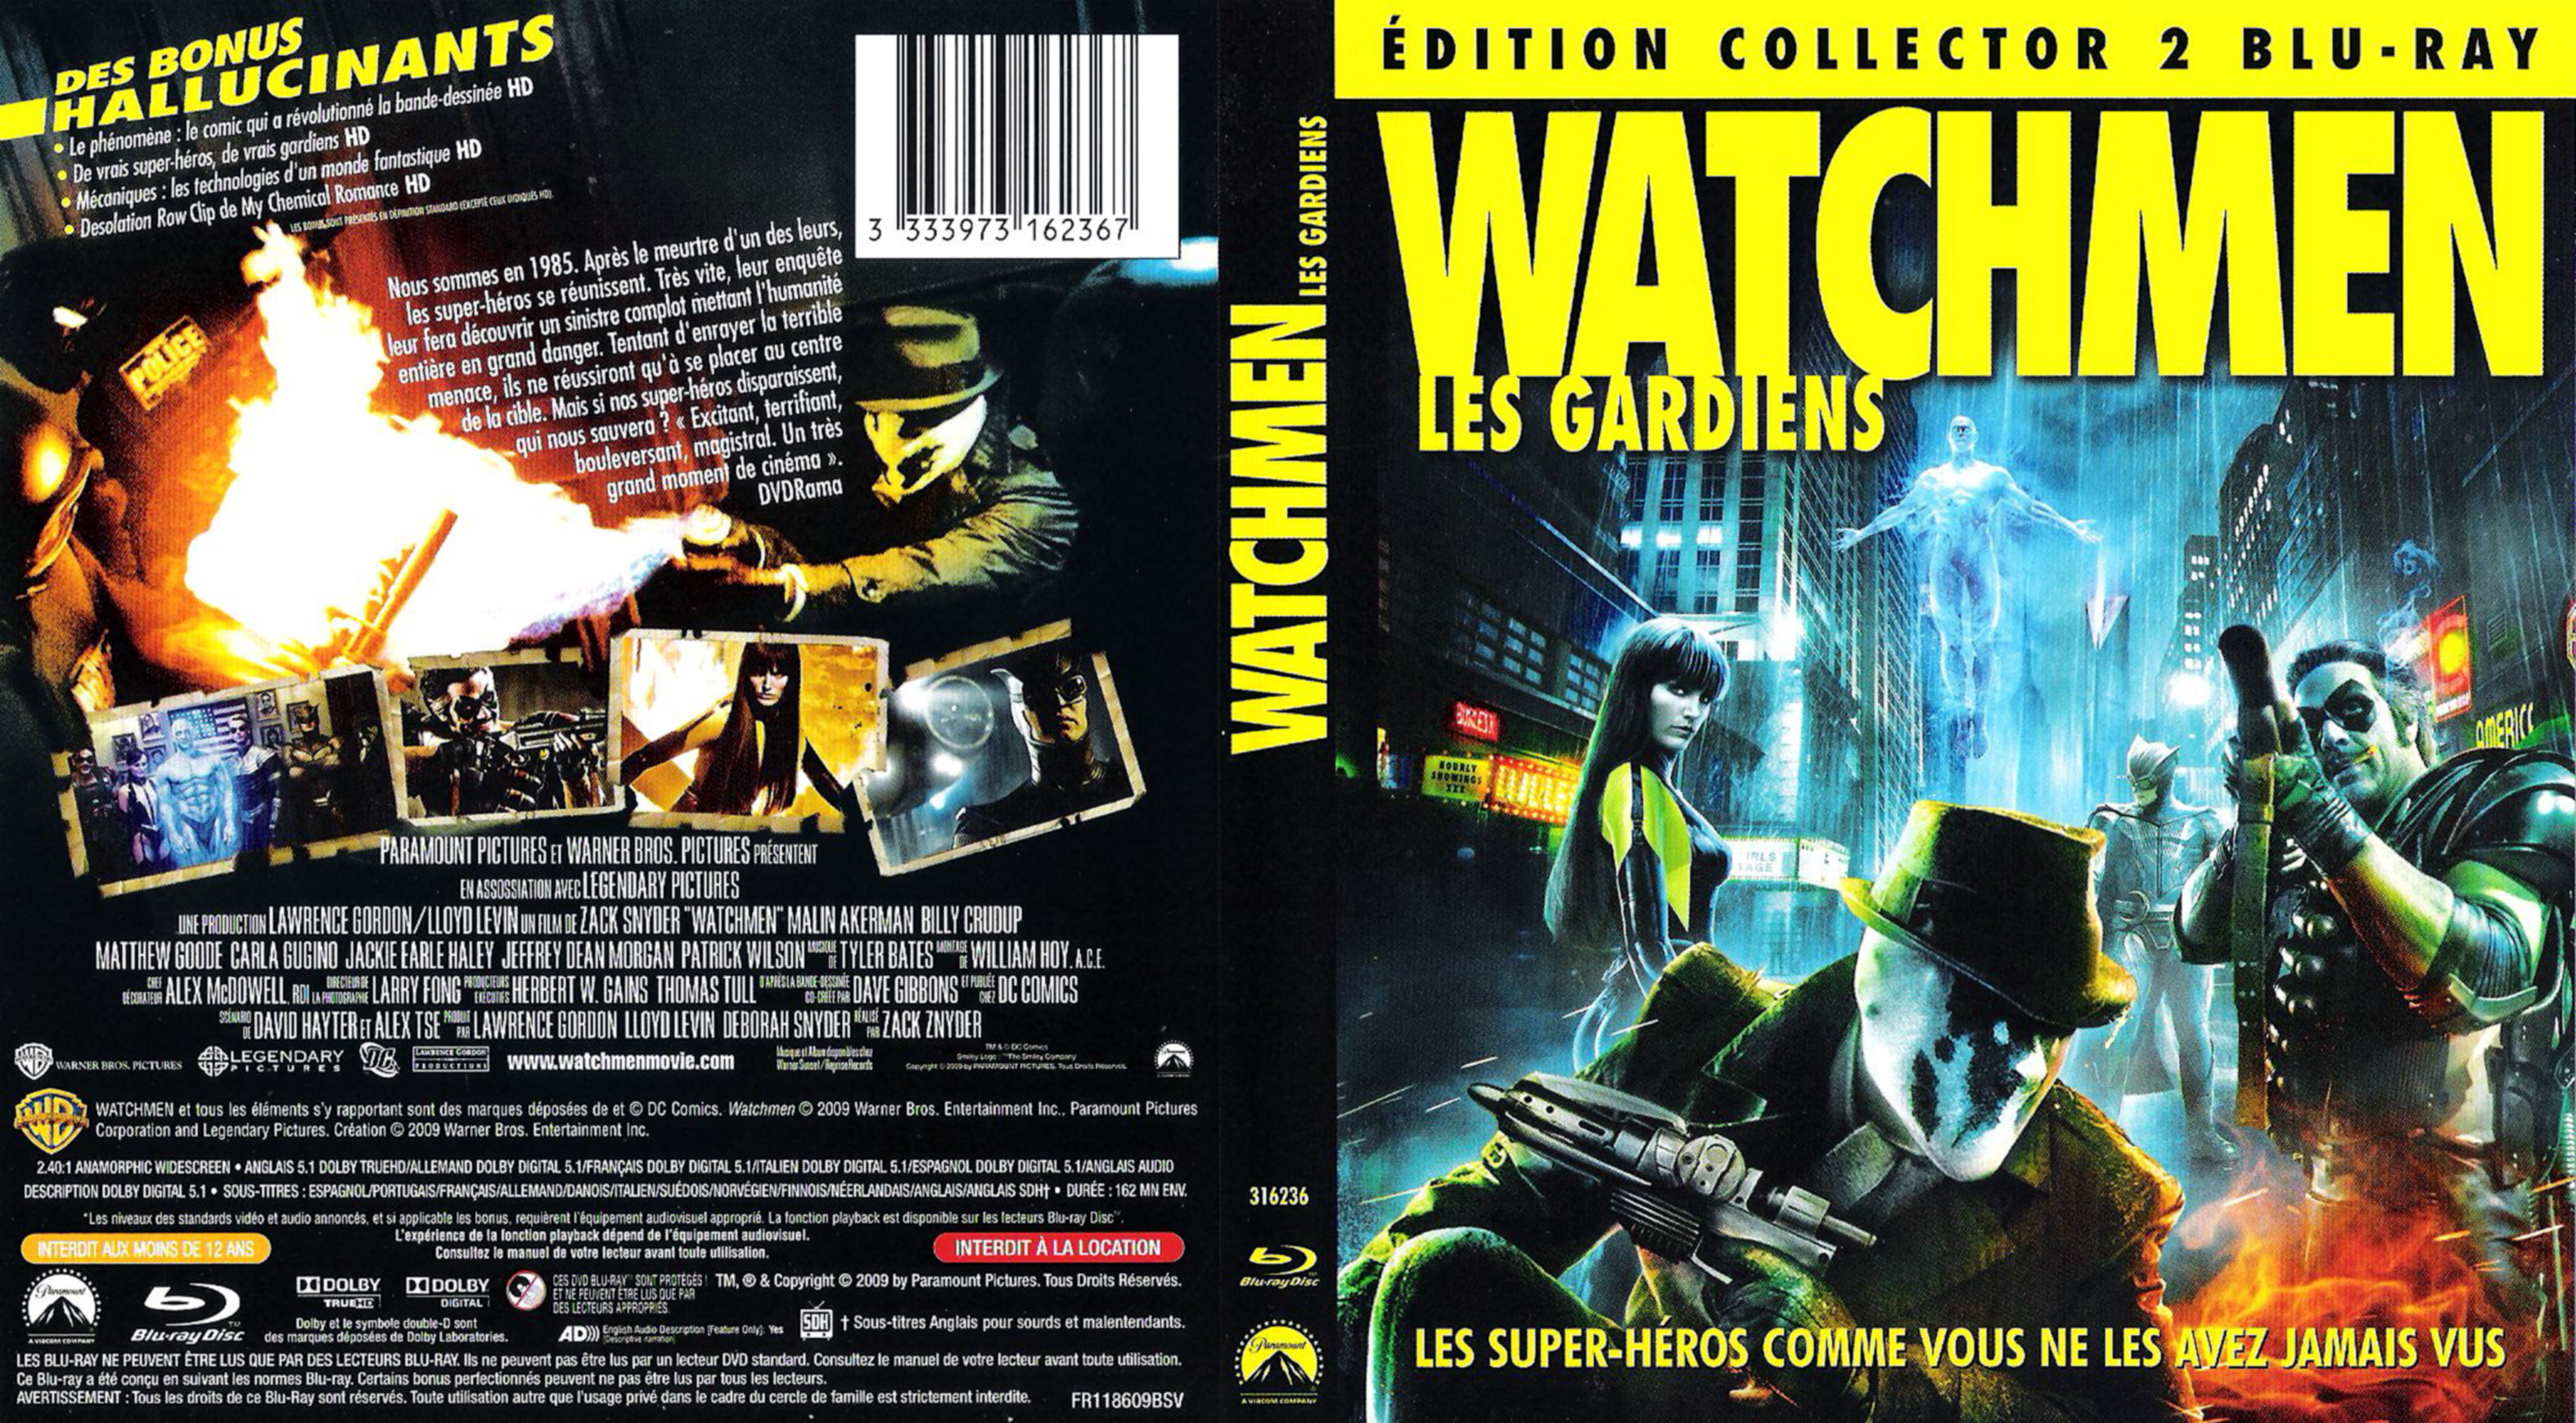 Jaquette DVD Watchmen (BLU-RAY)